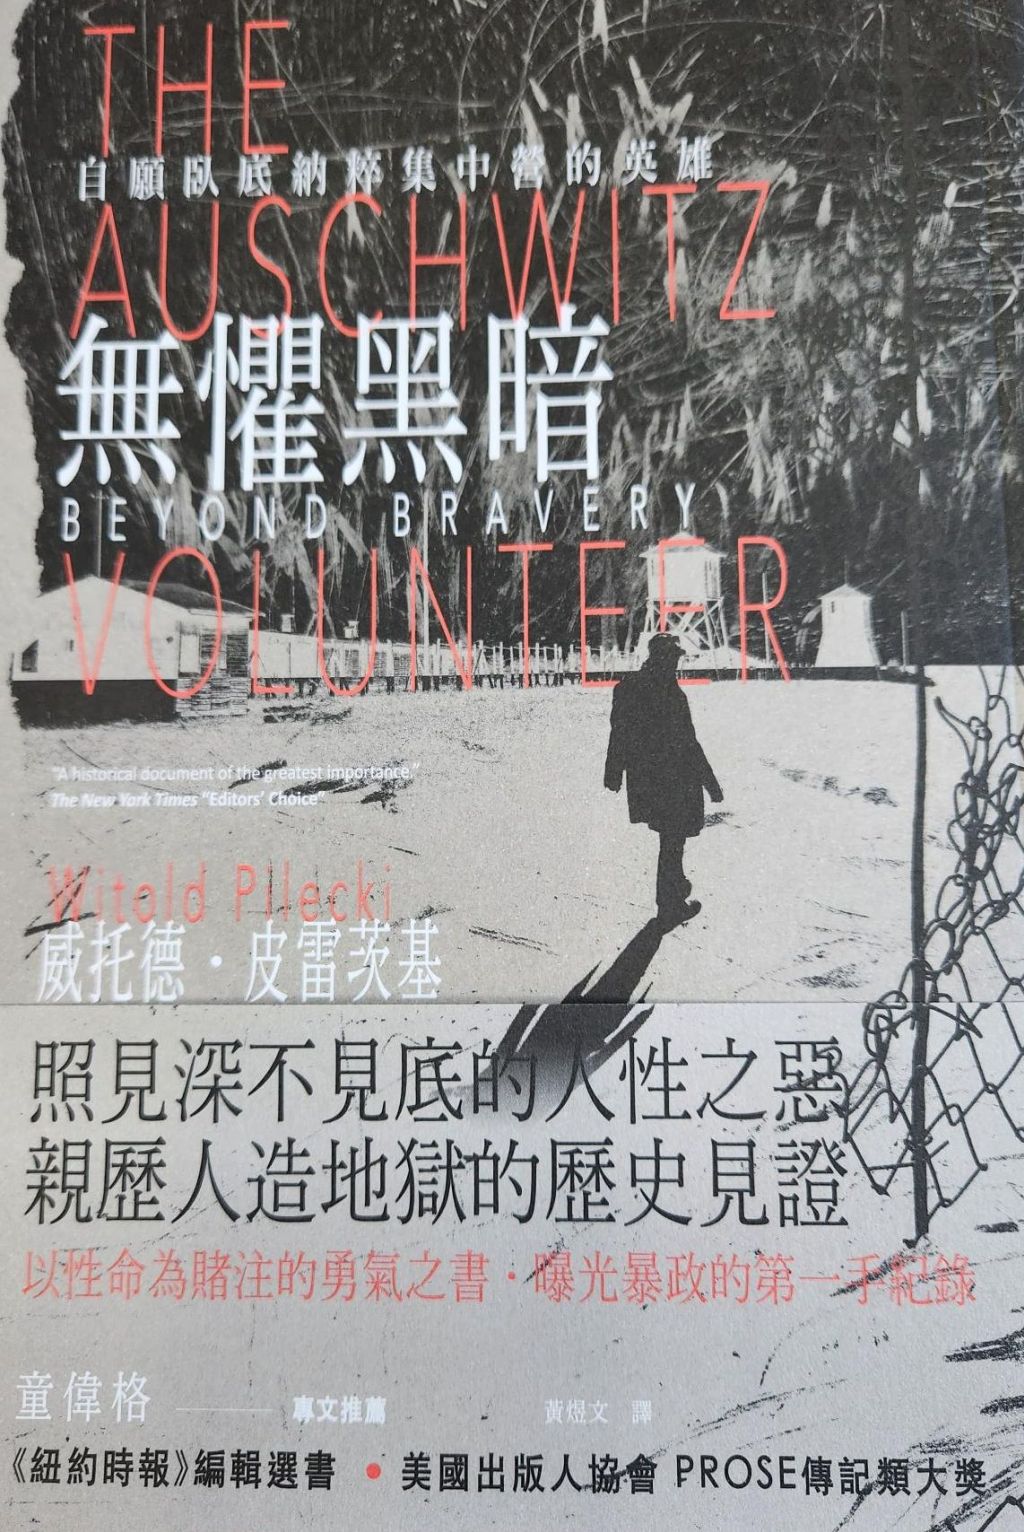 AuschwitzVolunteer TaiwanNewCover cropped r